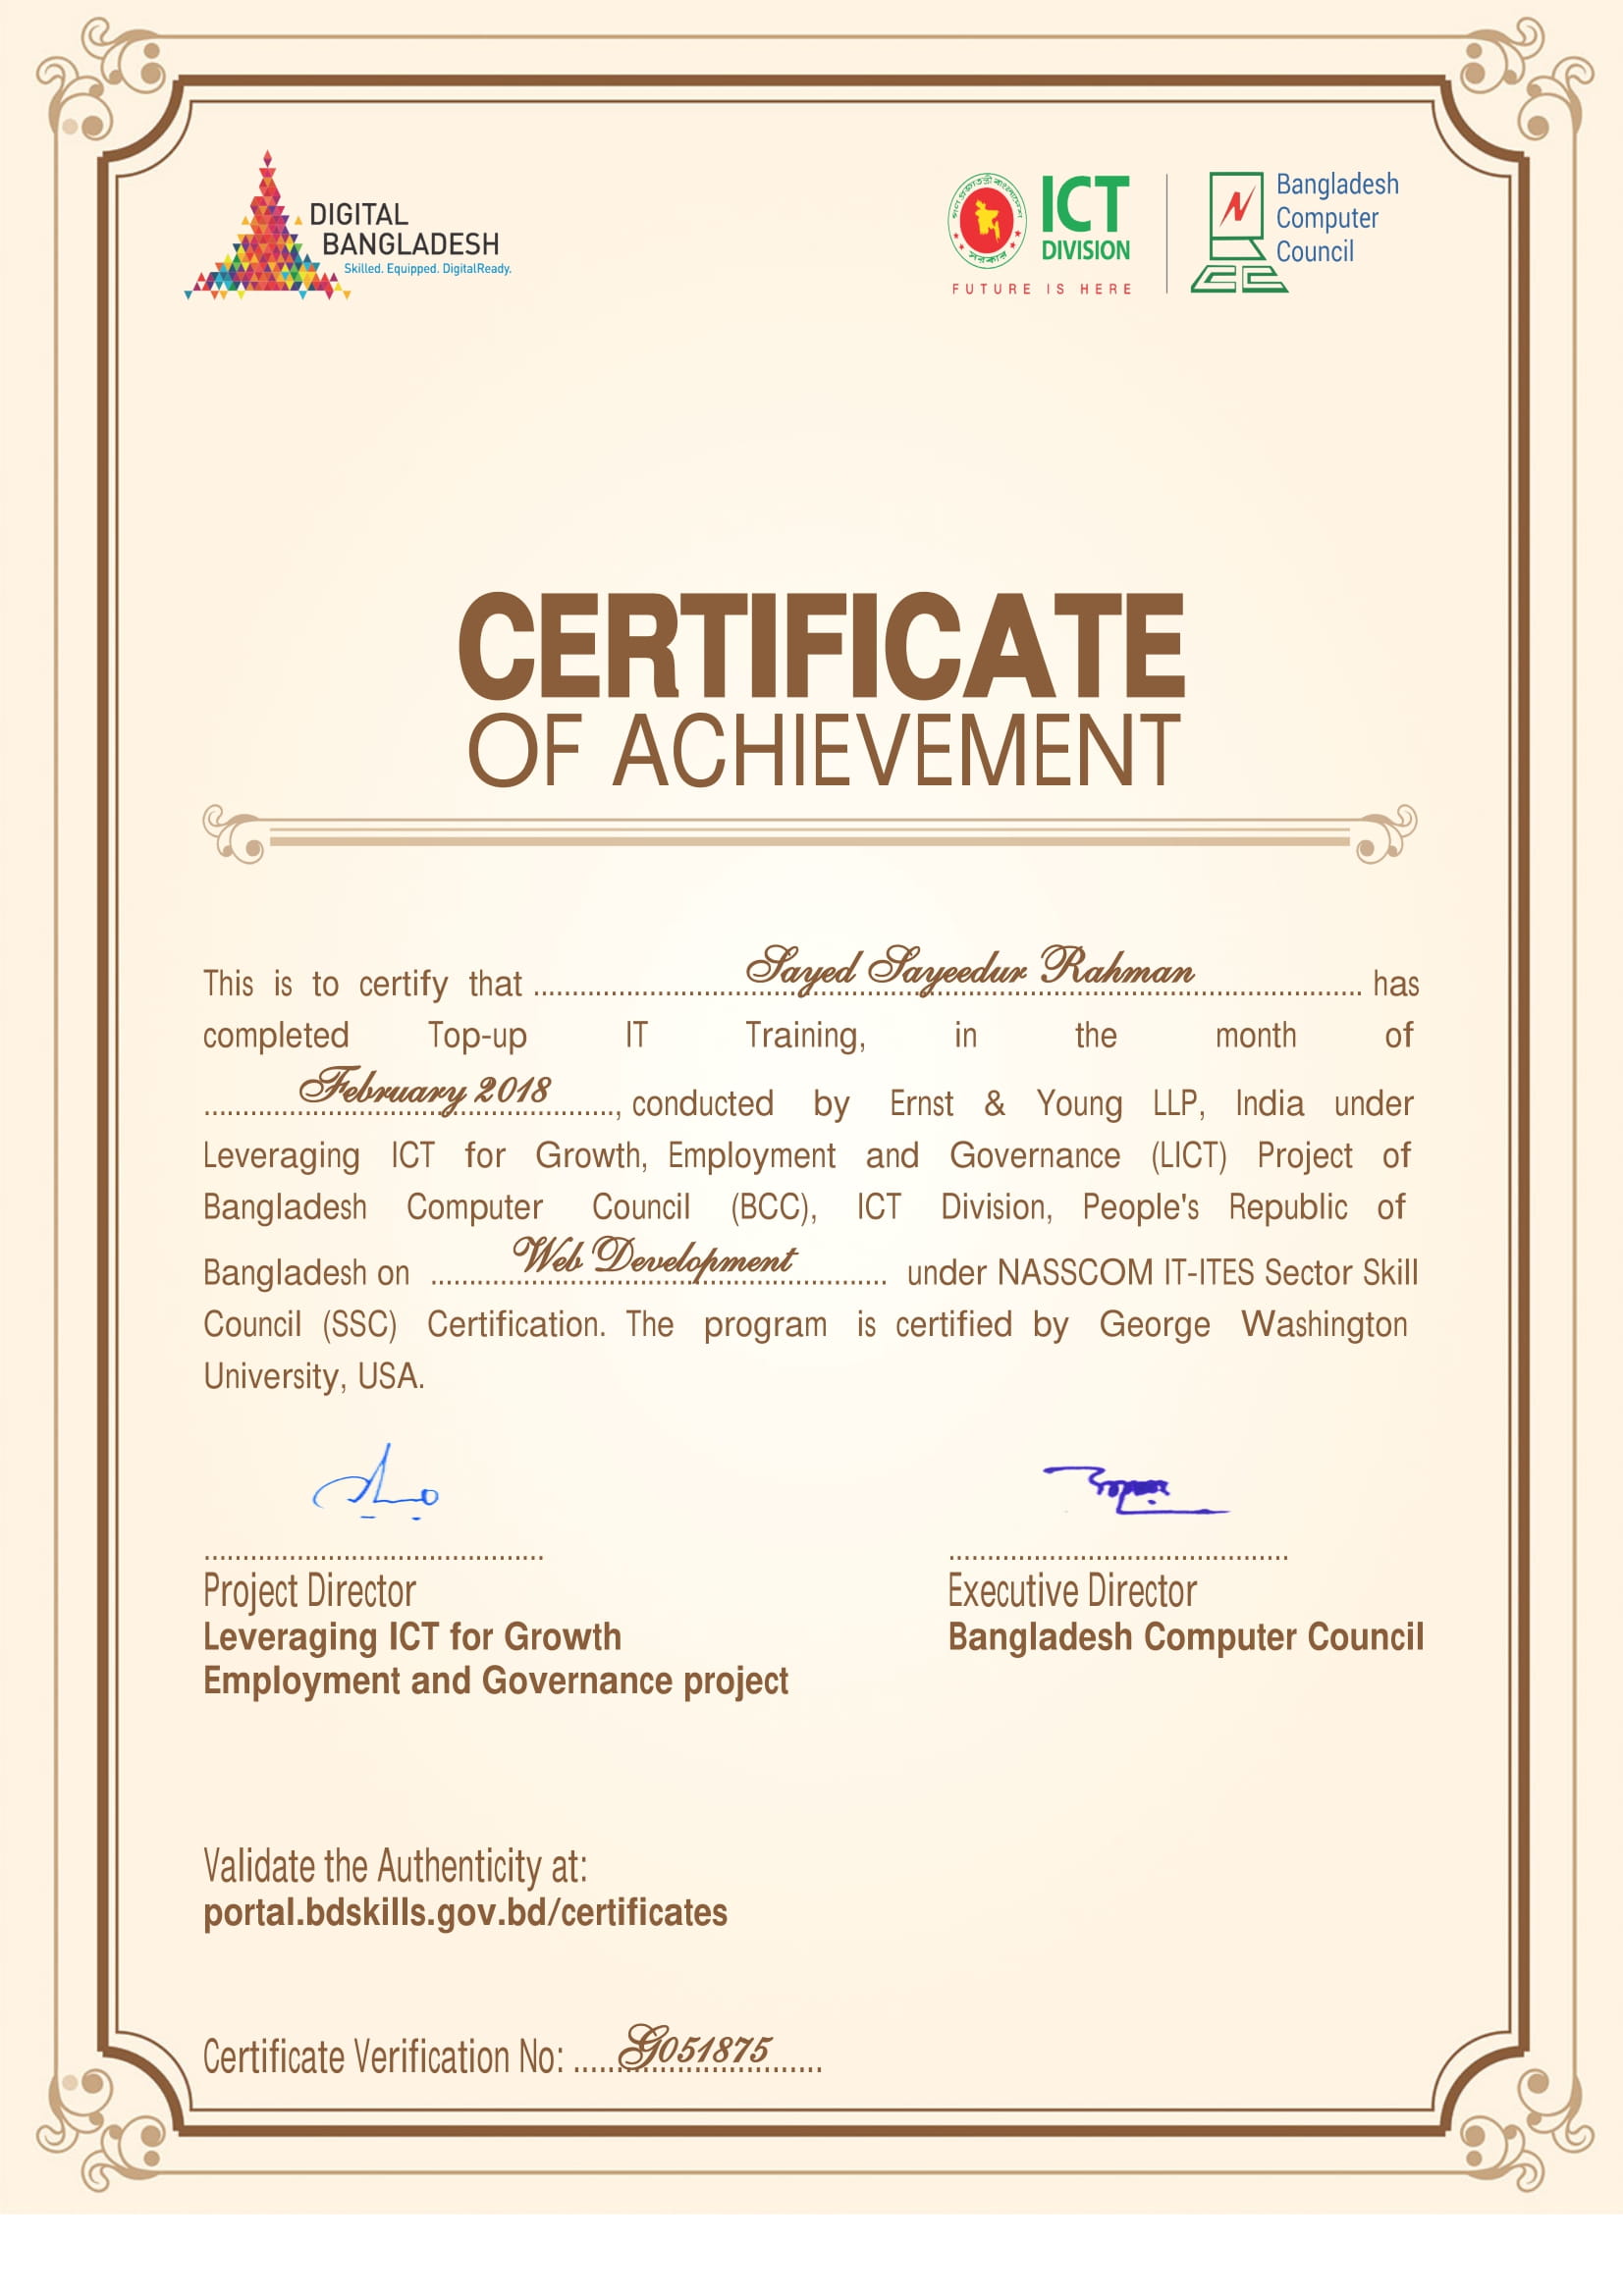 Bangladesh Computer Council Certificate